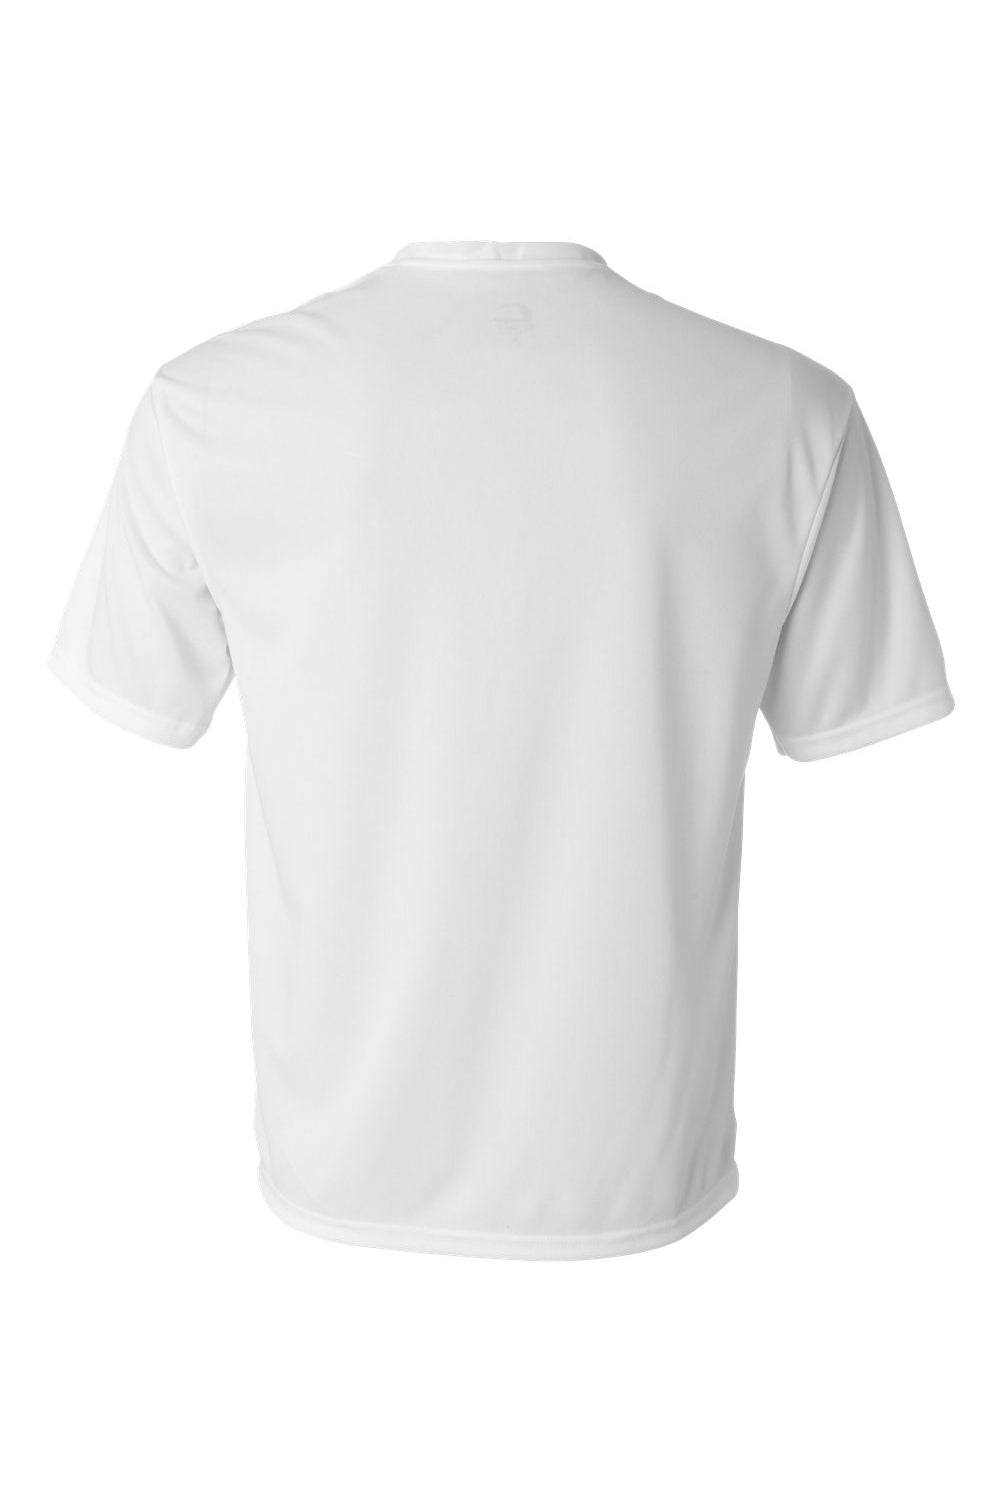 C2 Sport 5100 Mens Performance Moisture Wicking Short Sleeve Crewneck T-Shirt White Flat Back